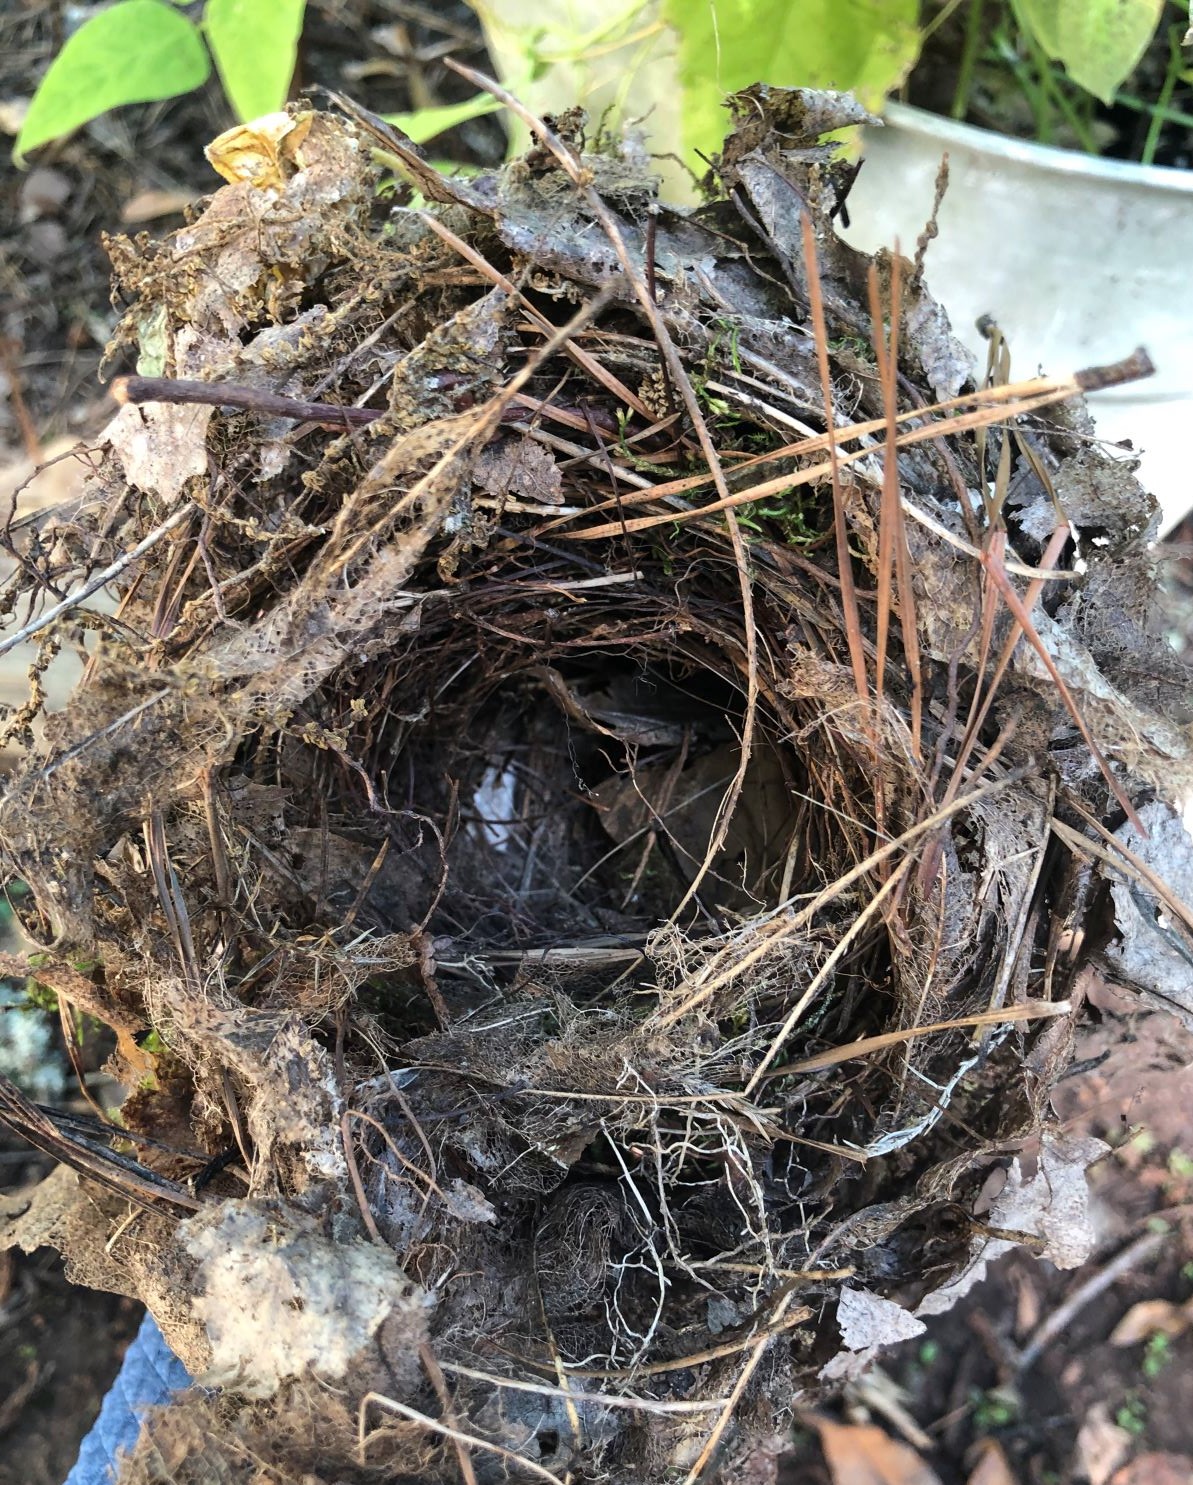 Locryn Finds a Bird’s Nest